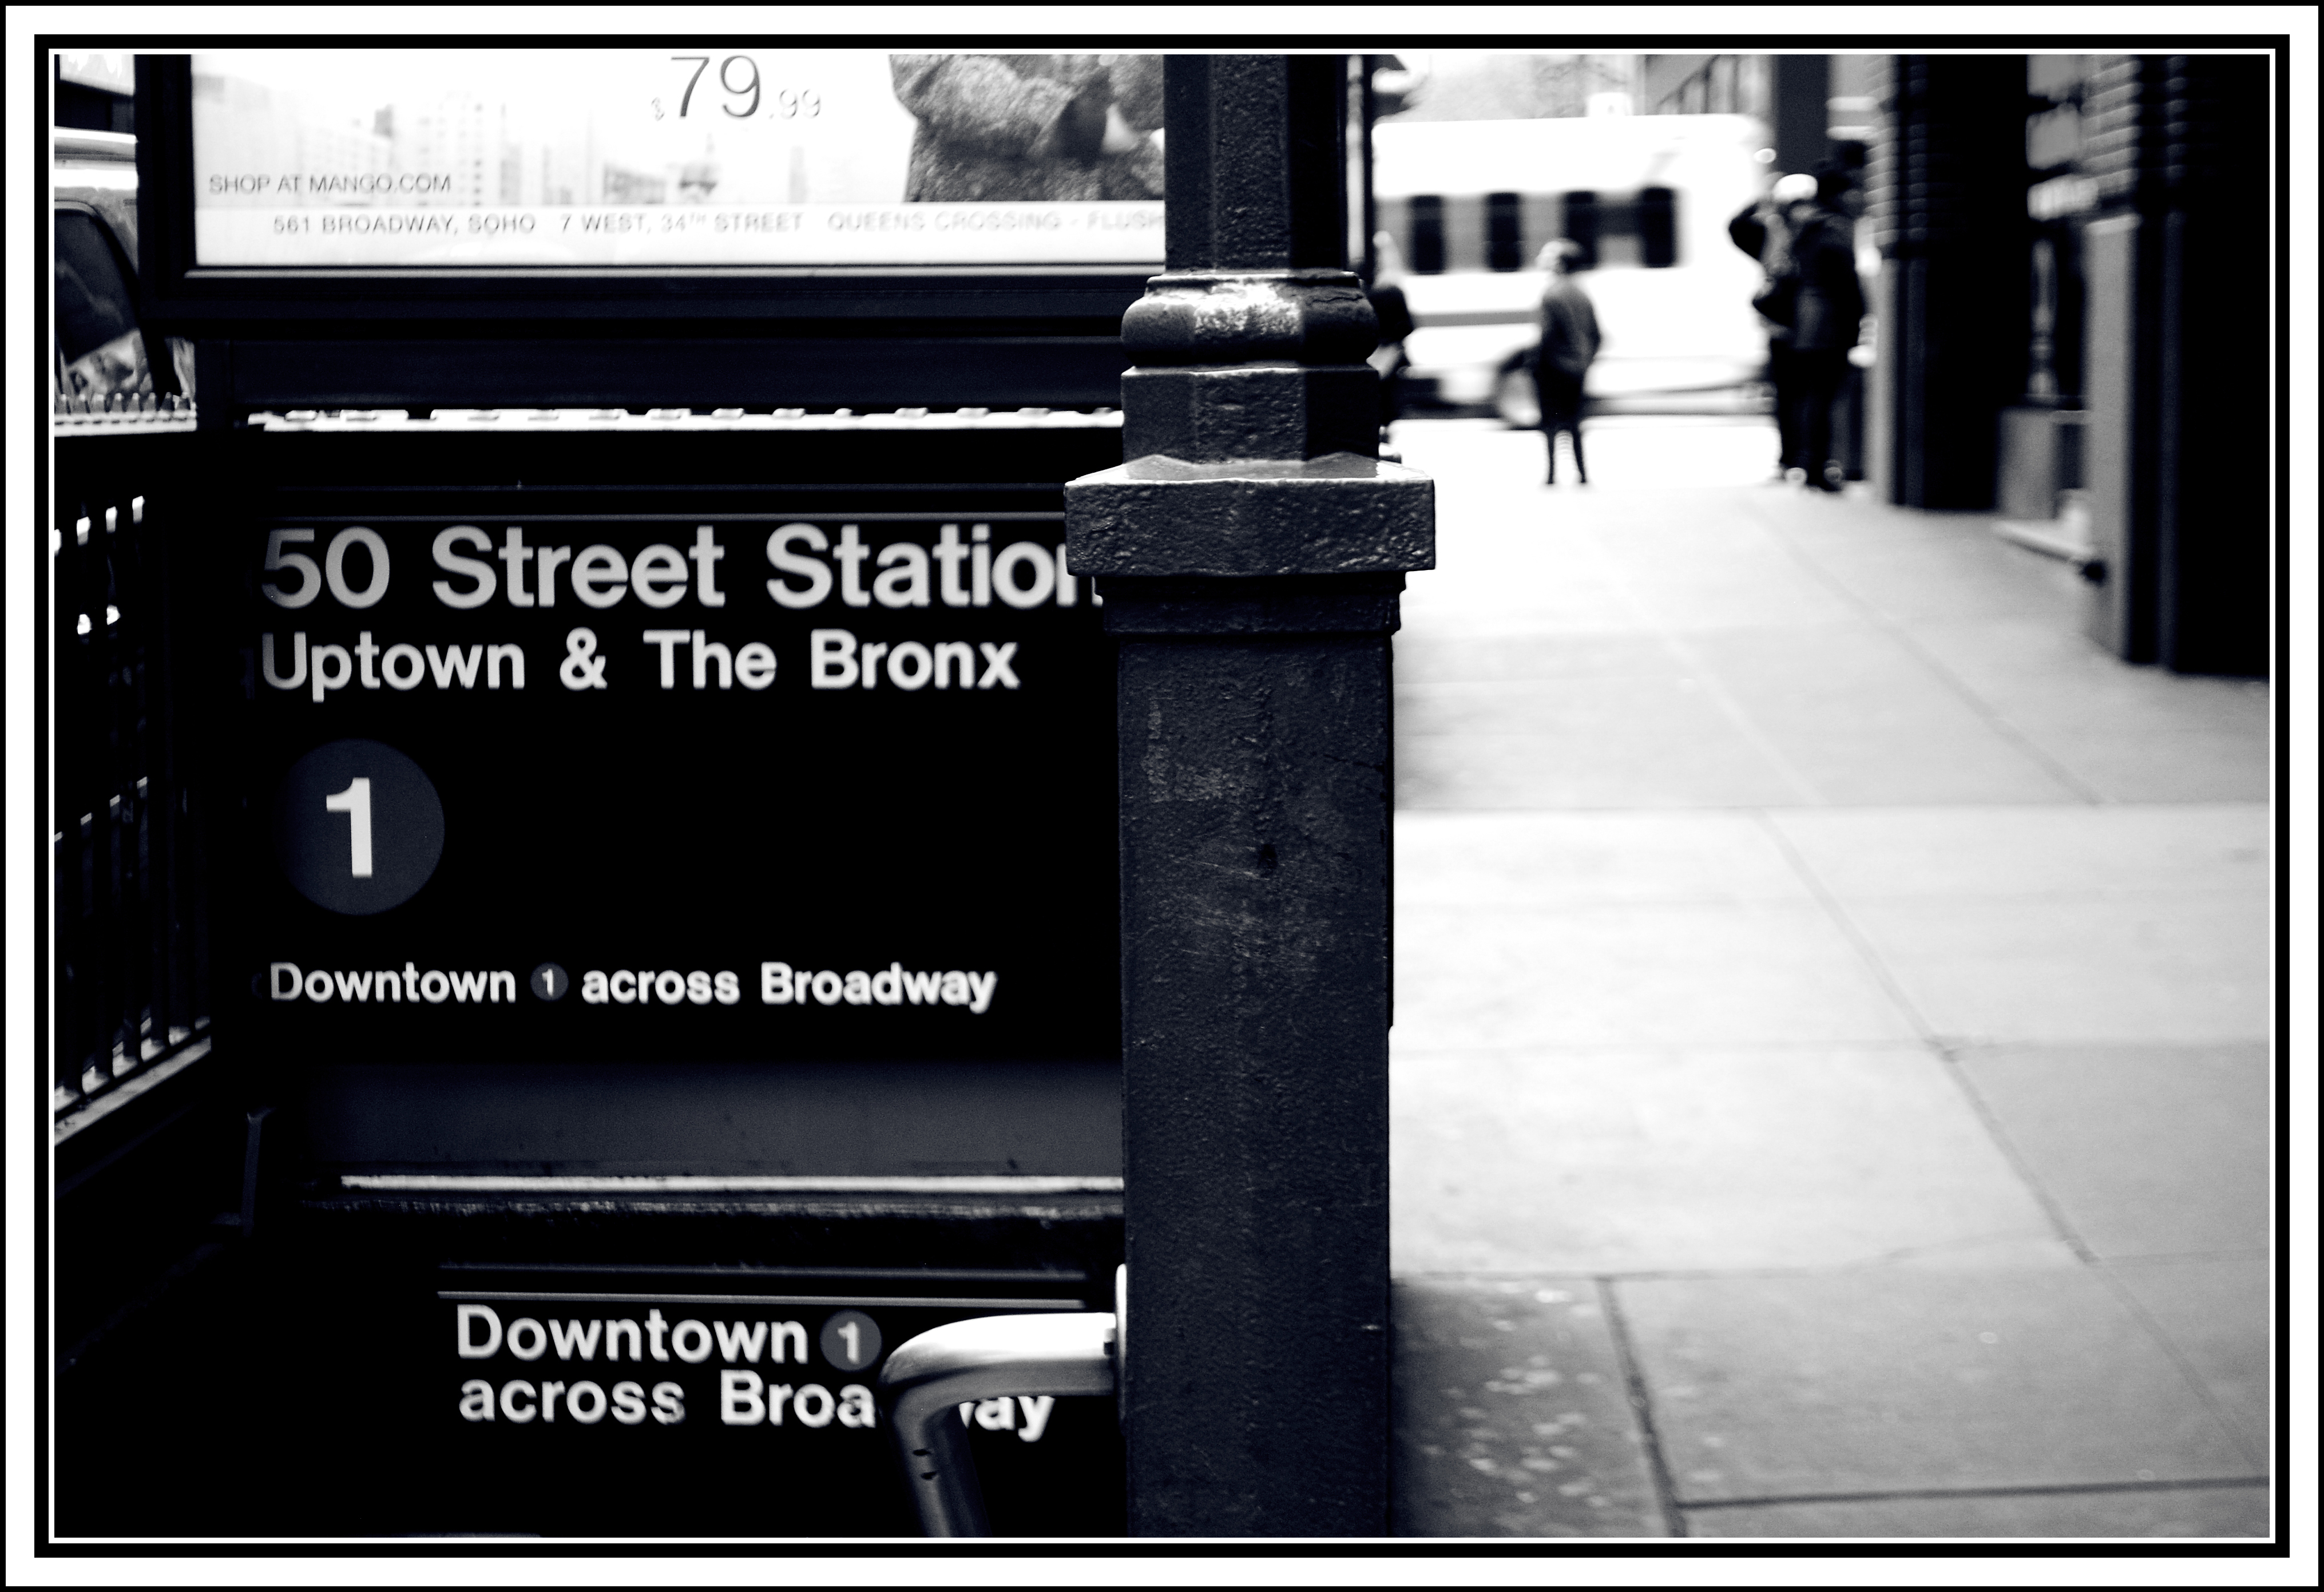 Enter_to_New_York_Subway_2013